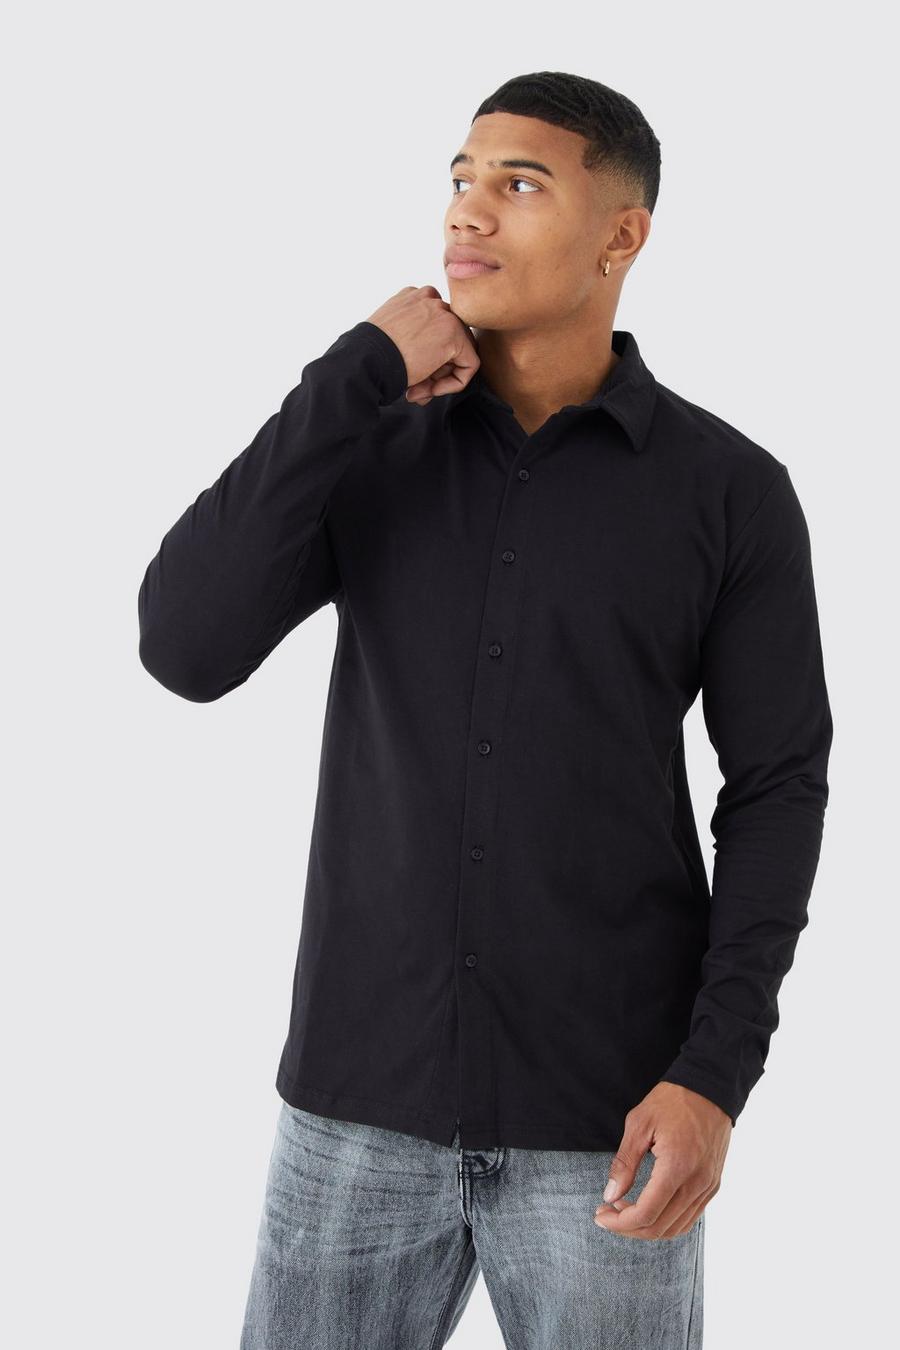 Black Long Sleeve Jersey Knit Shirt